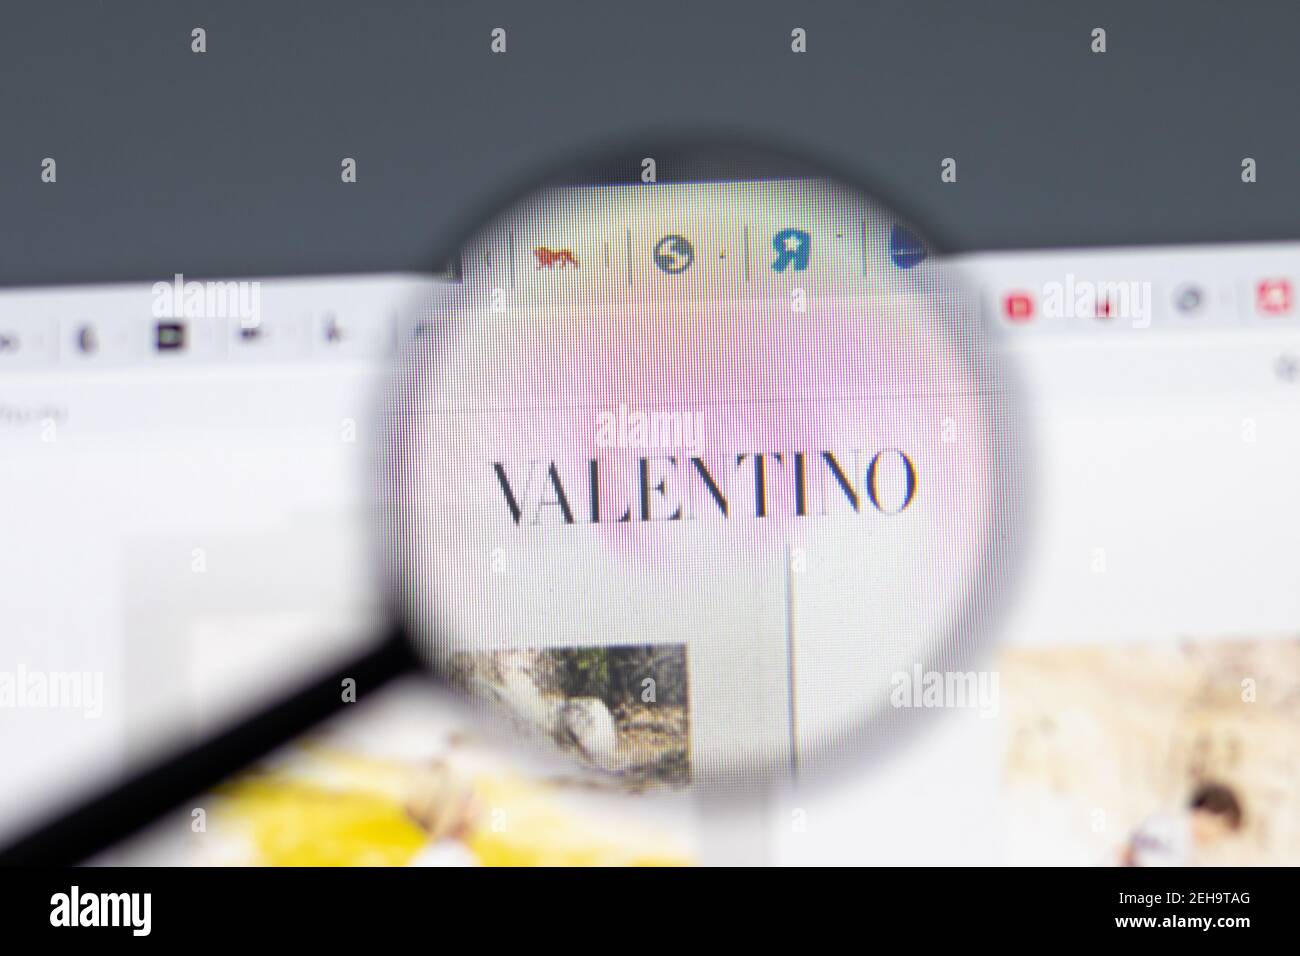 valentino europe website,Limited Time Offer,slabrealty.com